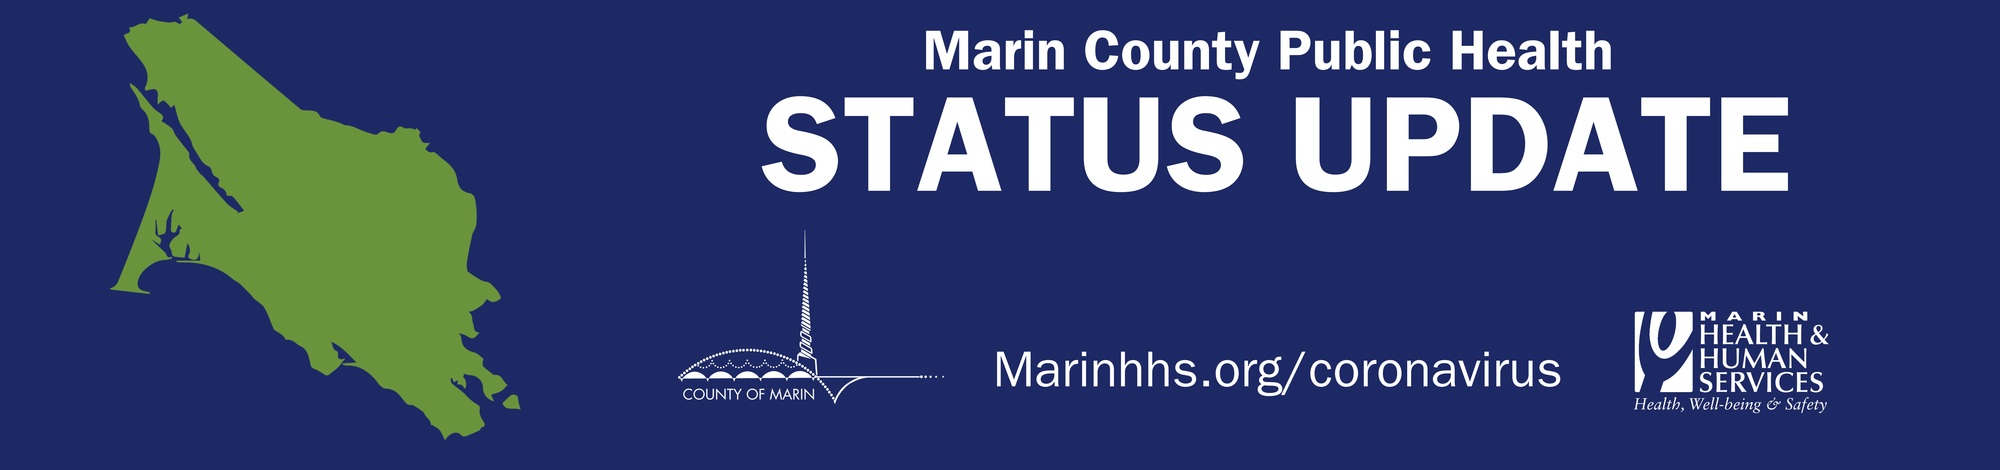 Marin County Public Health Status Update graphic